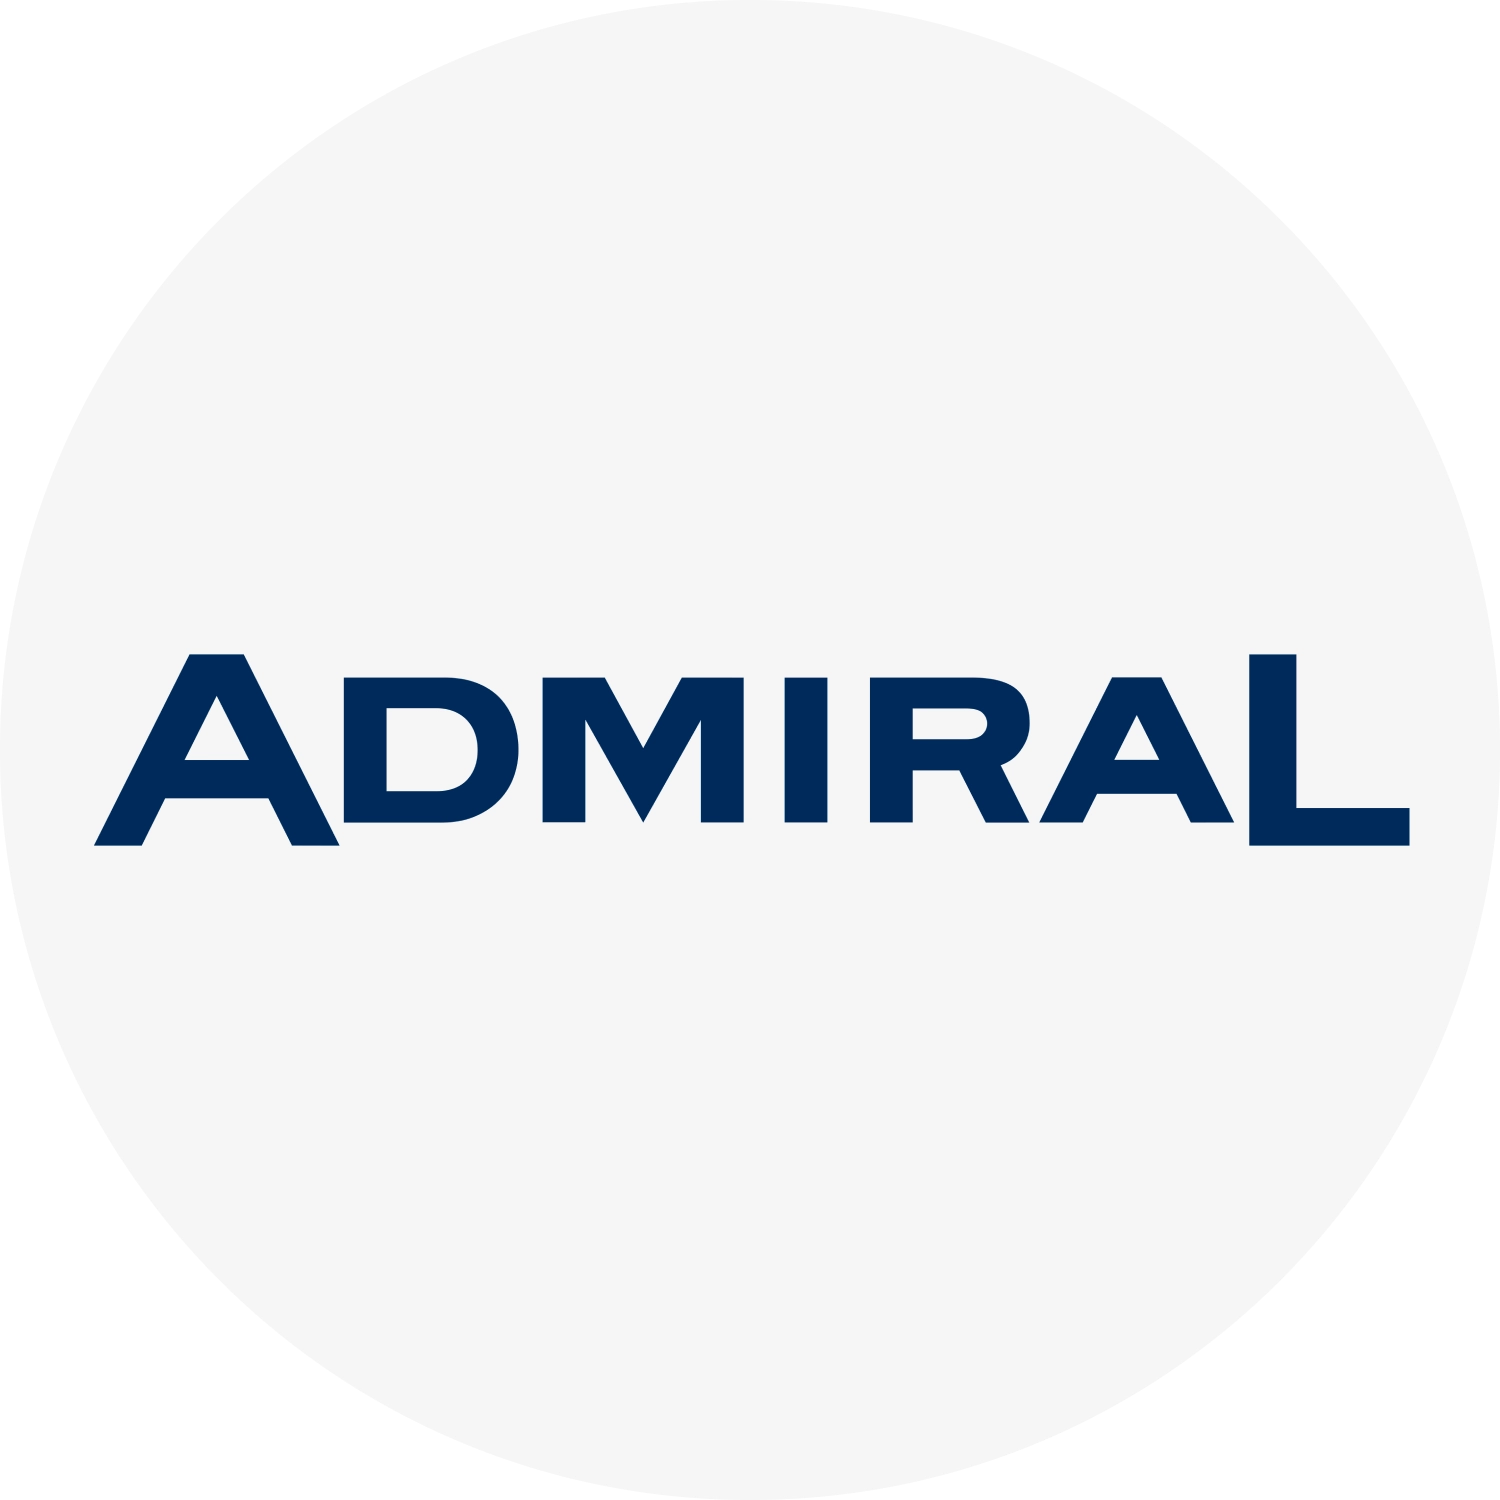 Admiral casino logo rotund 1500x1500 gri